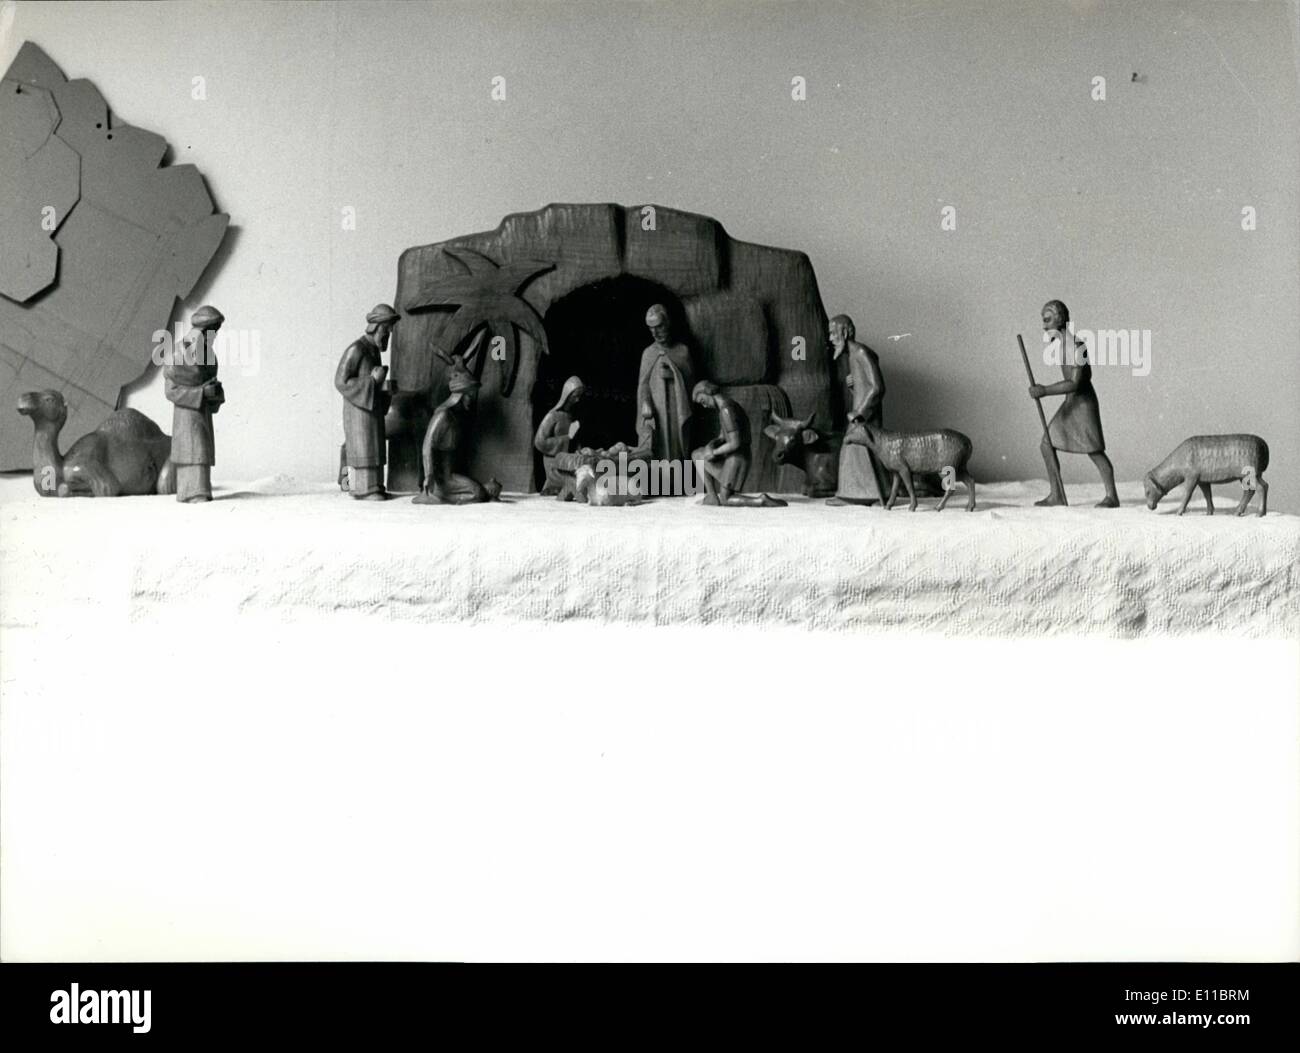 Diciembre 12, 1976 - Natividad figurillas de madera; La foto muestra uno de natividad figurillas hechas por el suizo Fritz Kehrli tallista de madera. Foto de stock